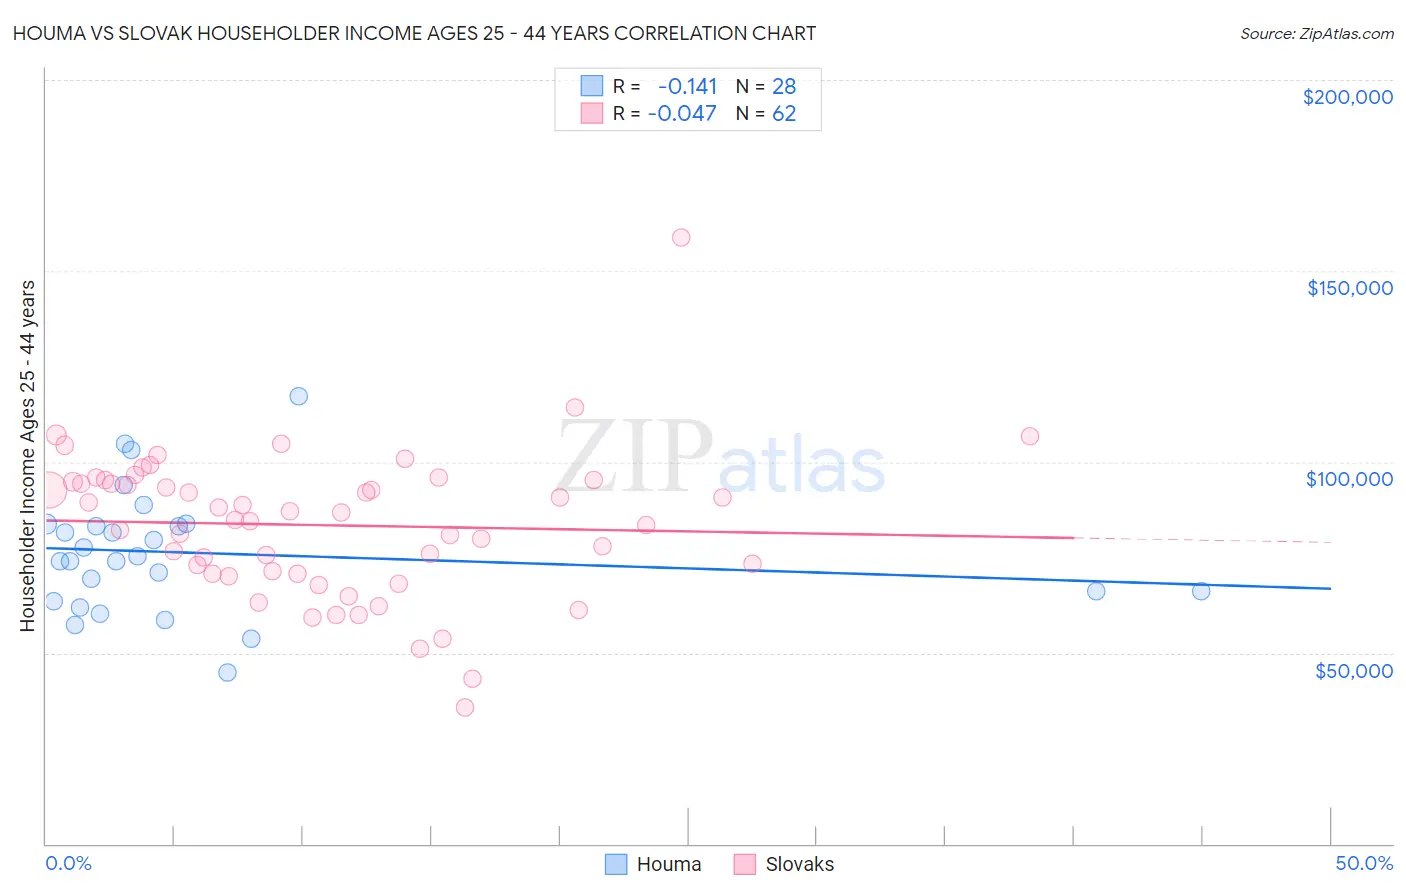 Houma vs Slovak Householder Income Ages 25 - 44 years